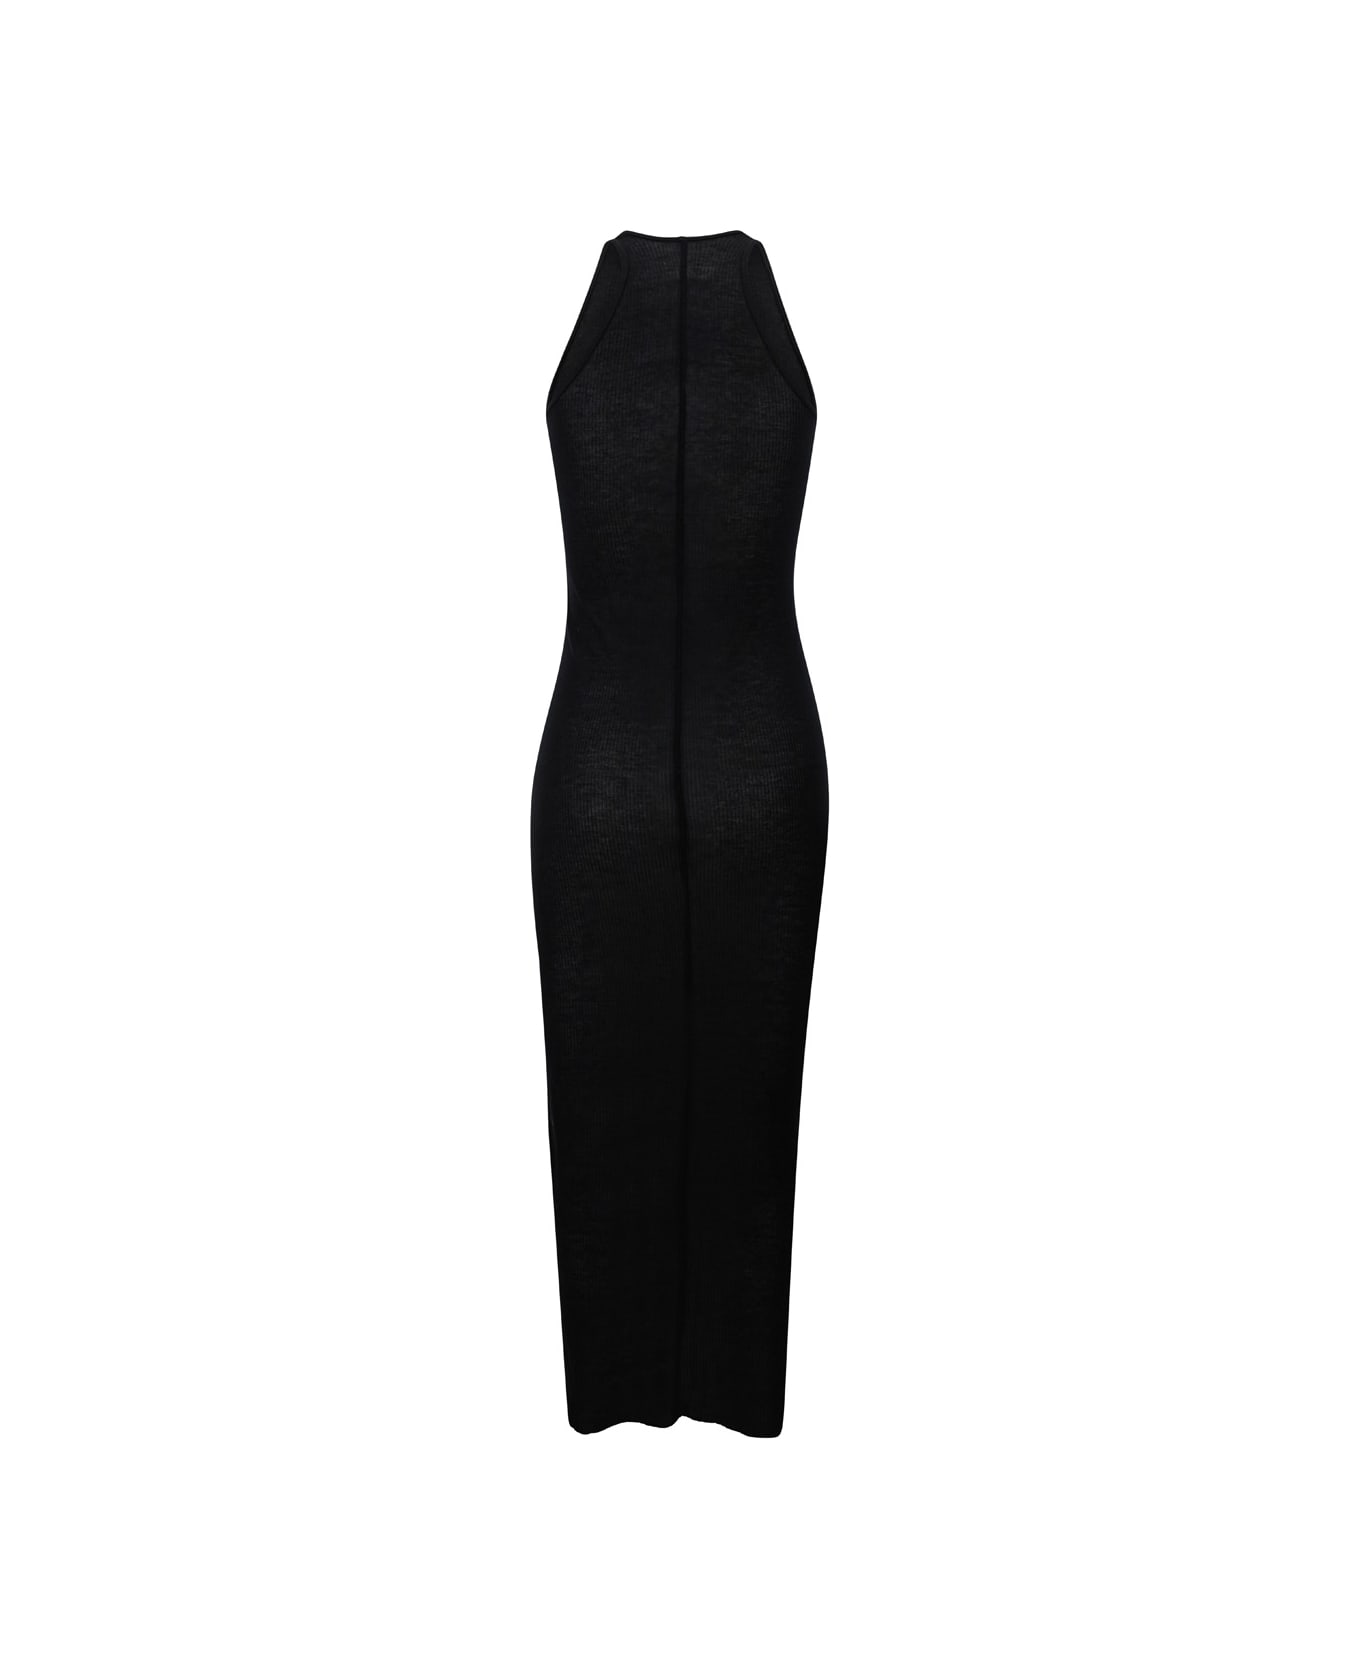 Rick Owens Black Sleeveless Crew Neck Dress In Technical Fabric Woman - Black